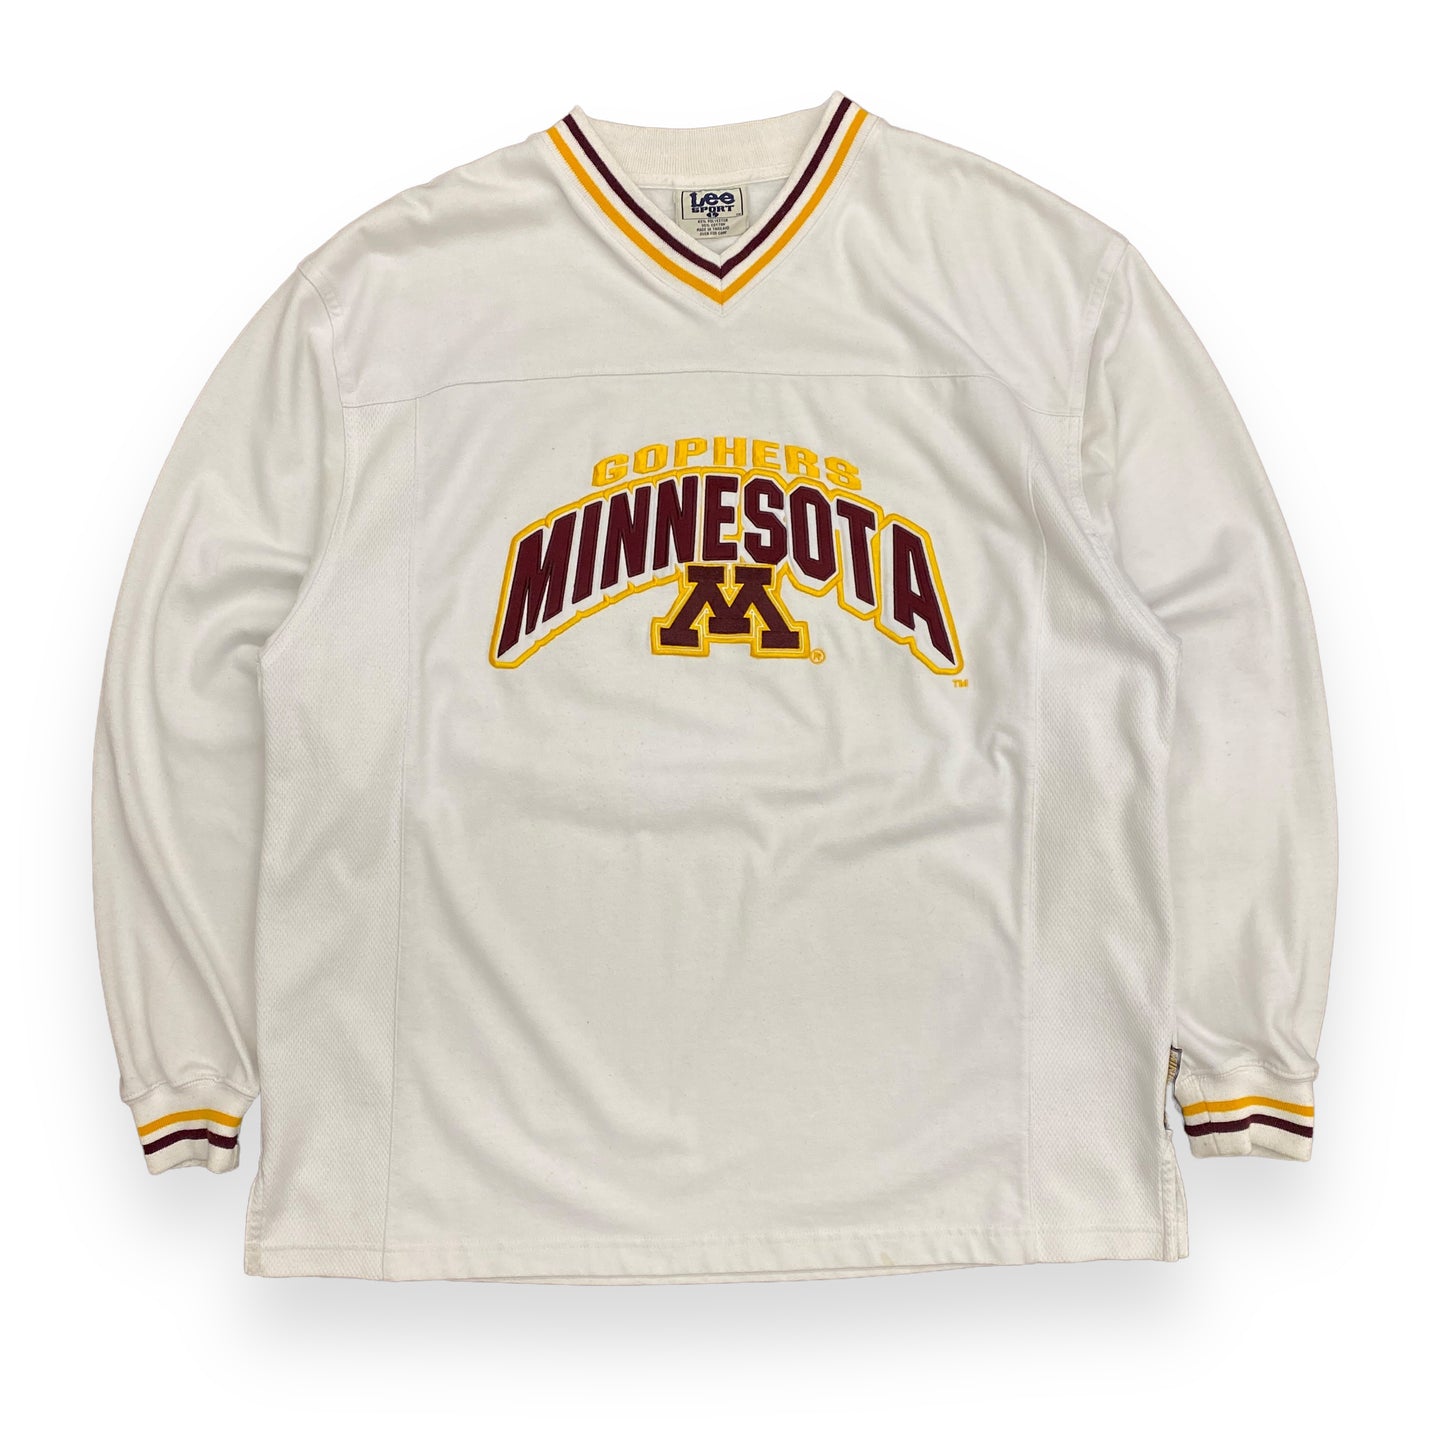 Vintage 1990s Lee Sport University of Minnesota "Golden Gophers" Long Sleeve Tee - Size Large